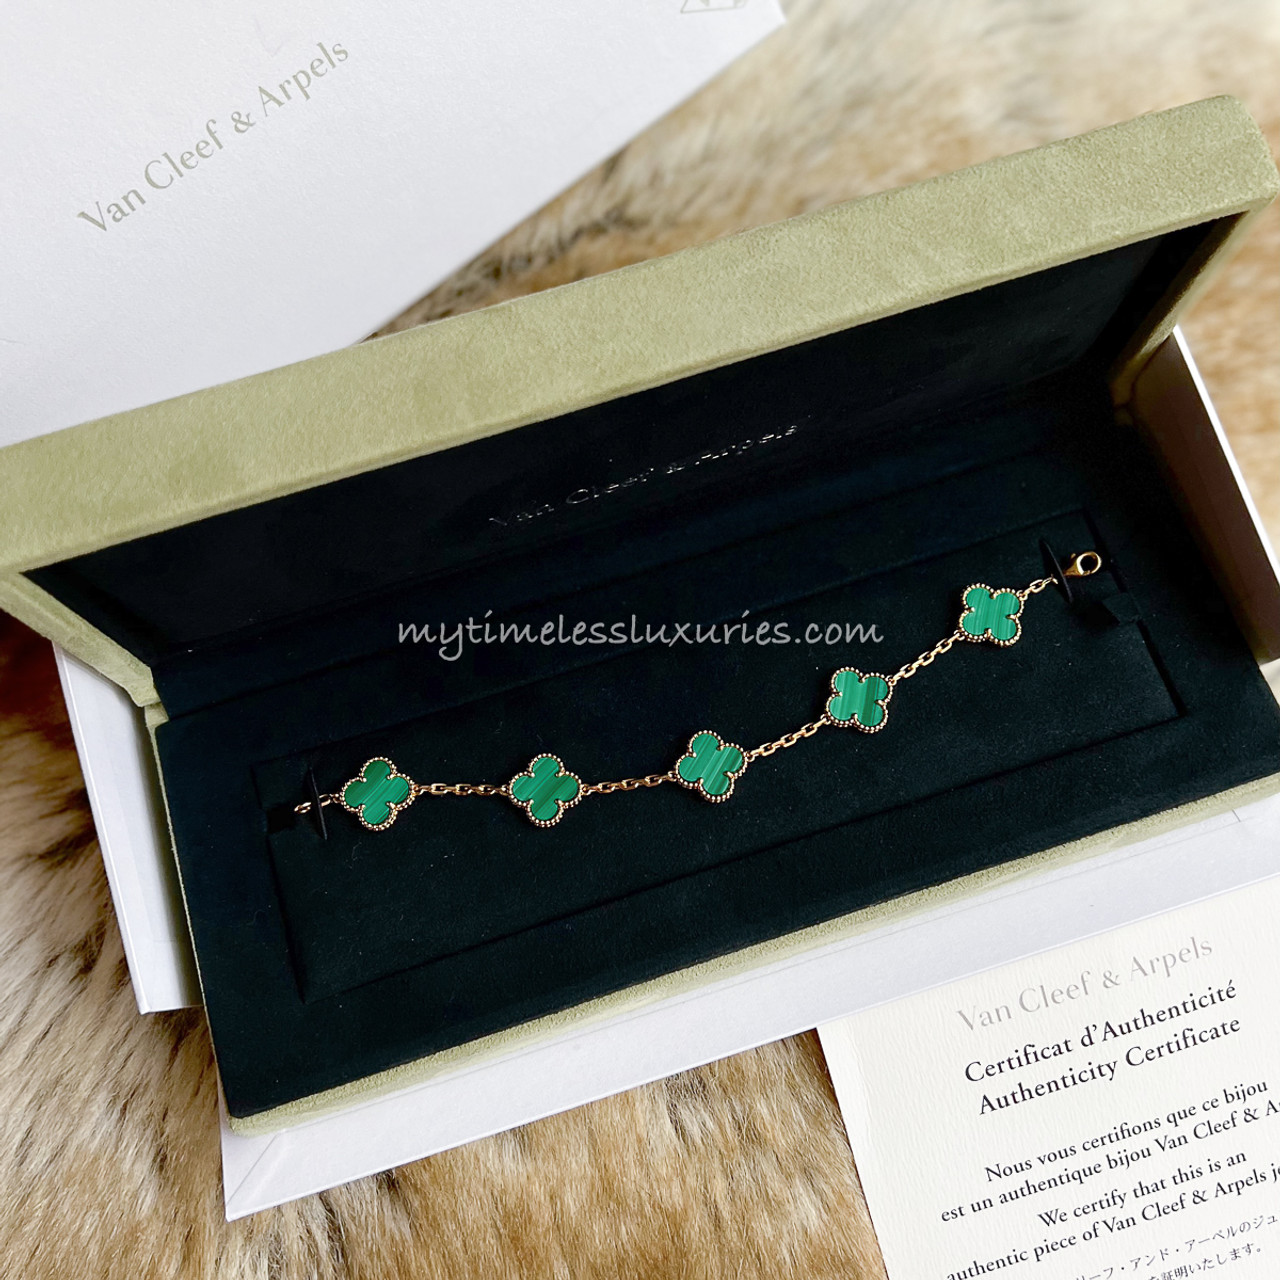 Rent Green Malachite Alhambra Bracelet from Van Cleef